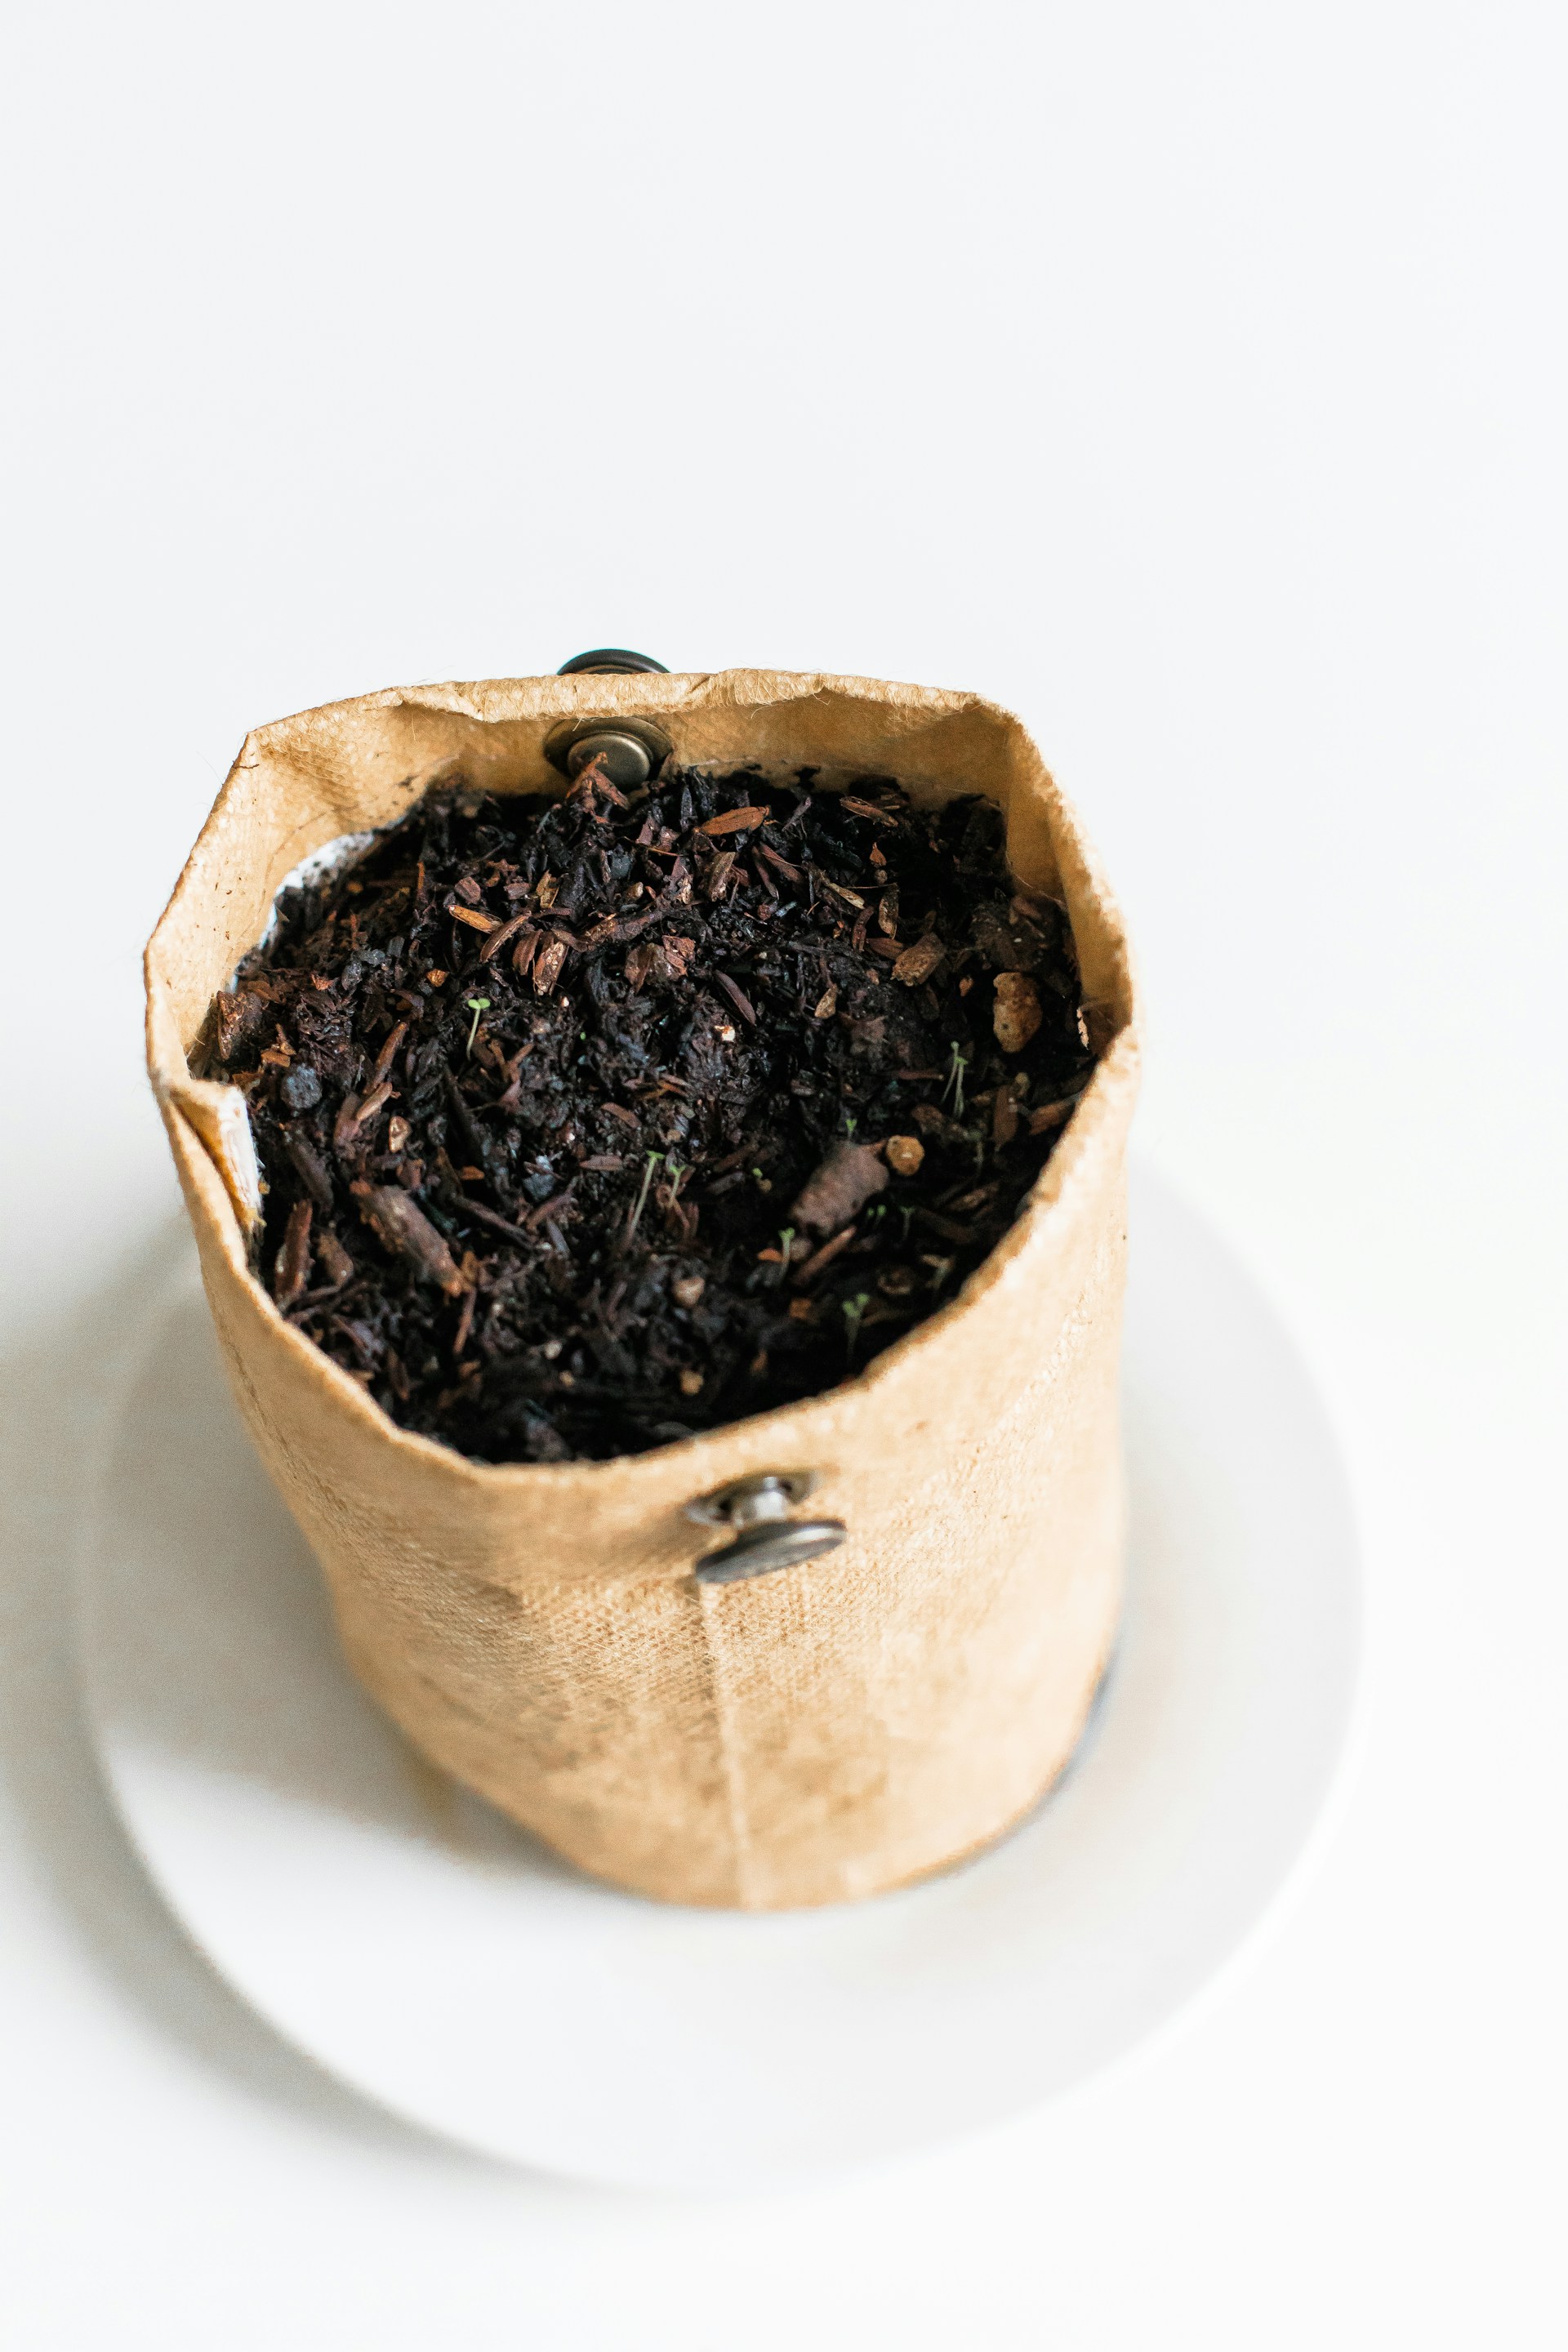 Composting tea bags